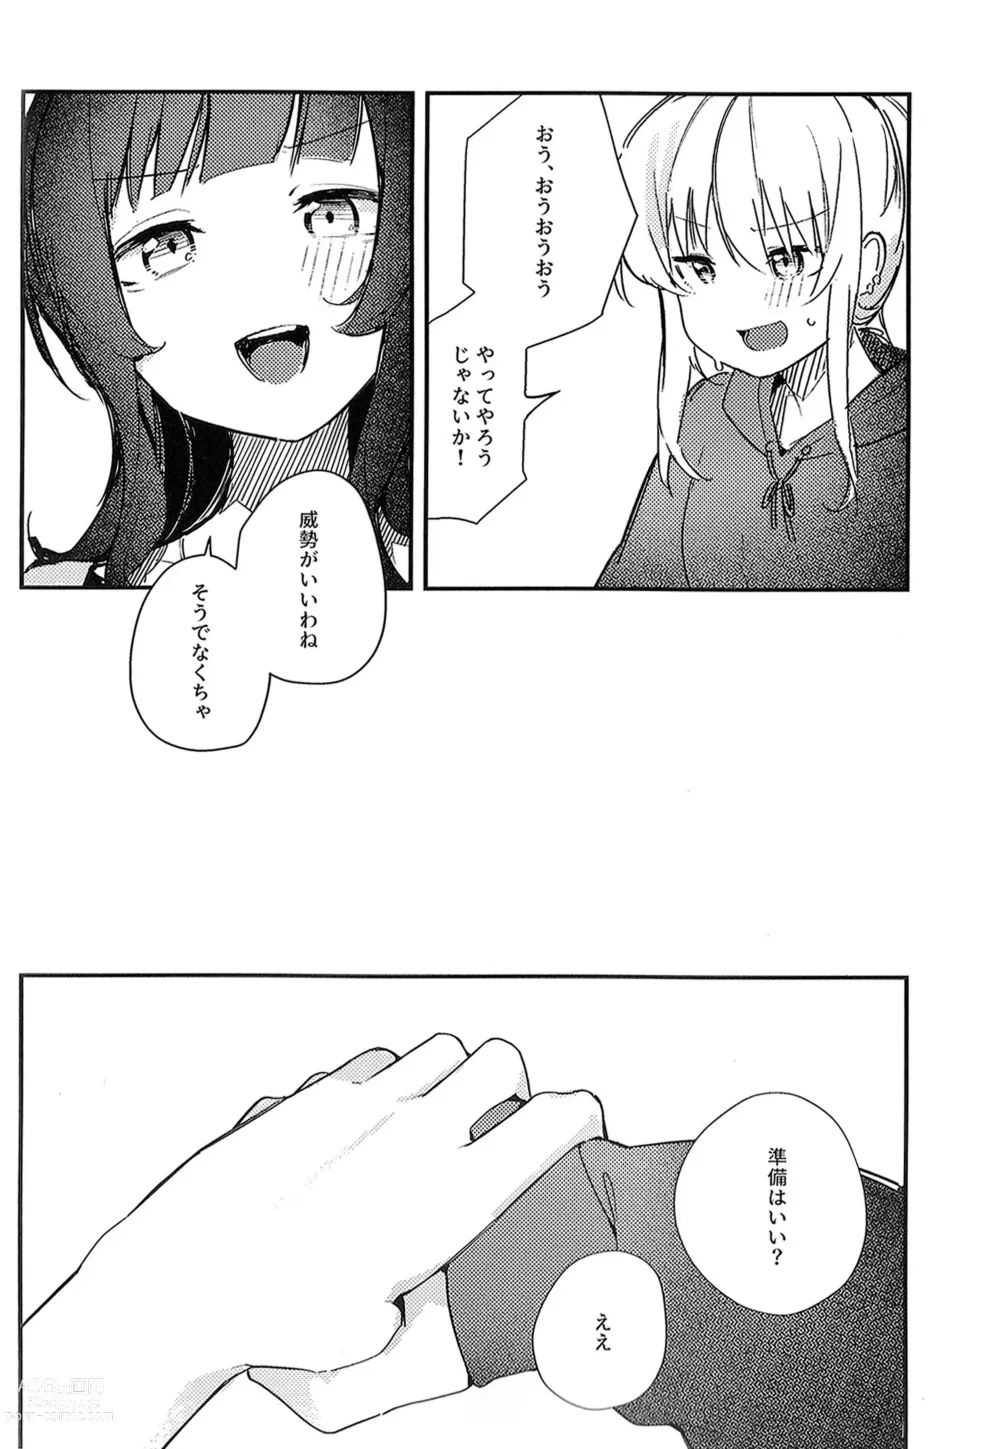 Page 20 of doujinshi MIRROR